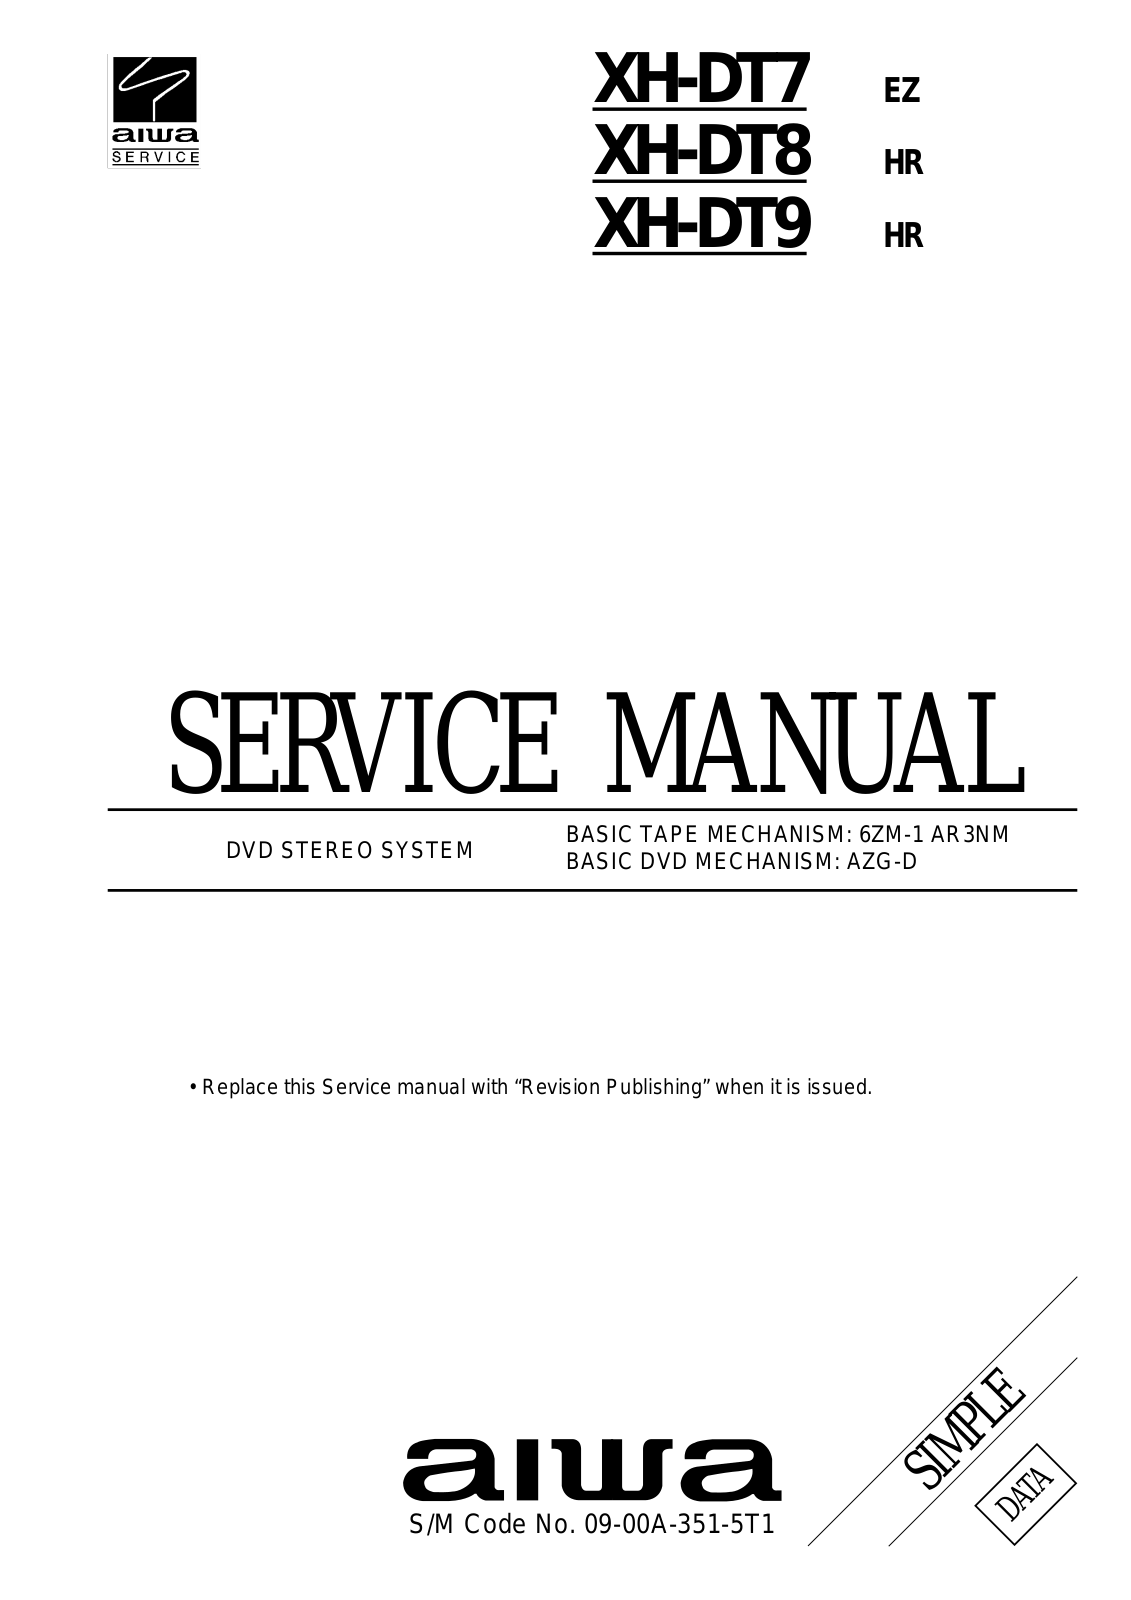 Aiwa XH-DT7 User Manual